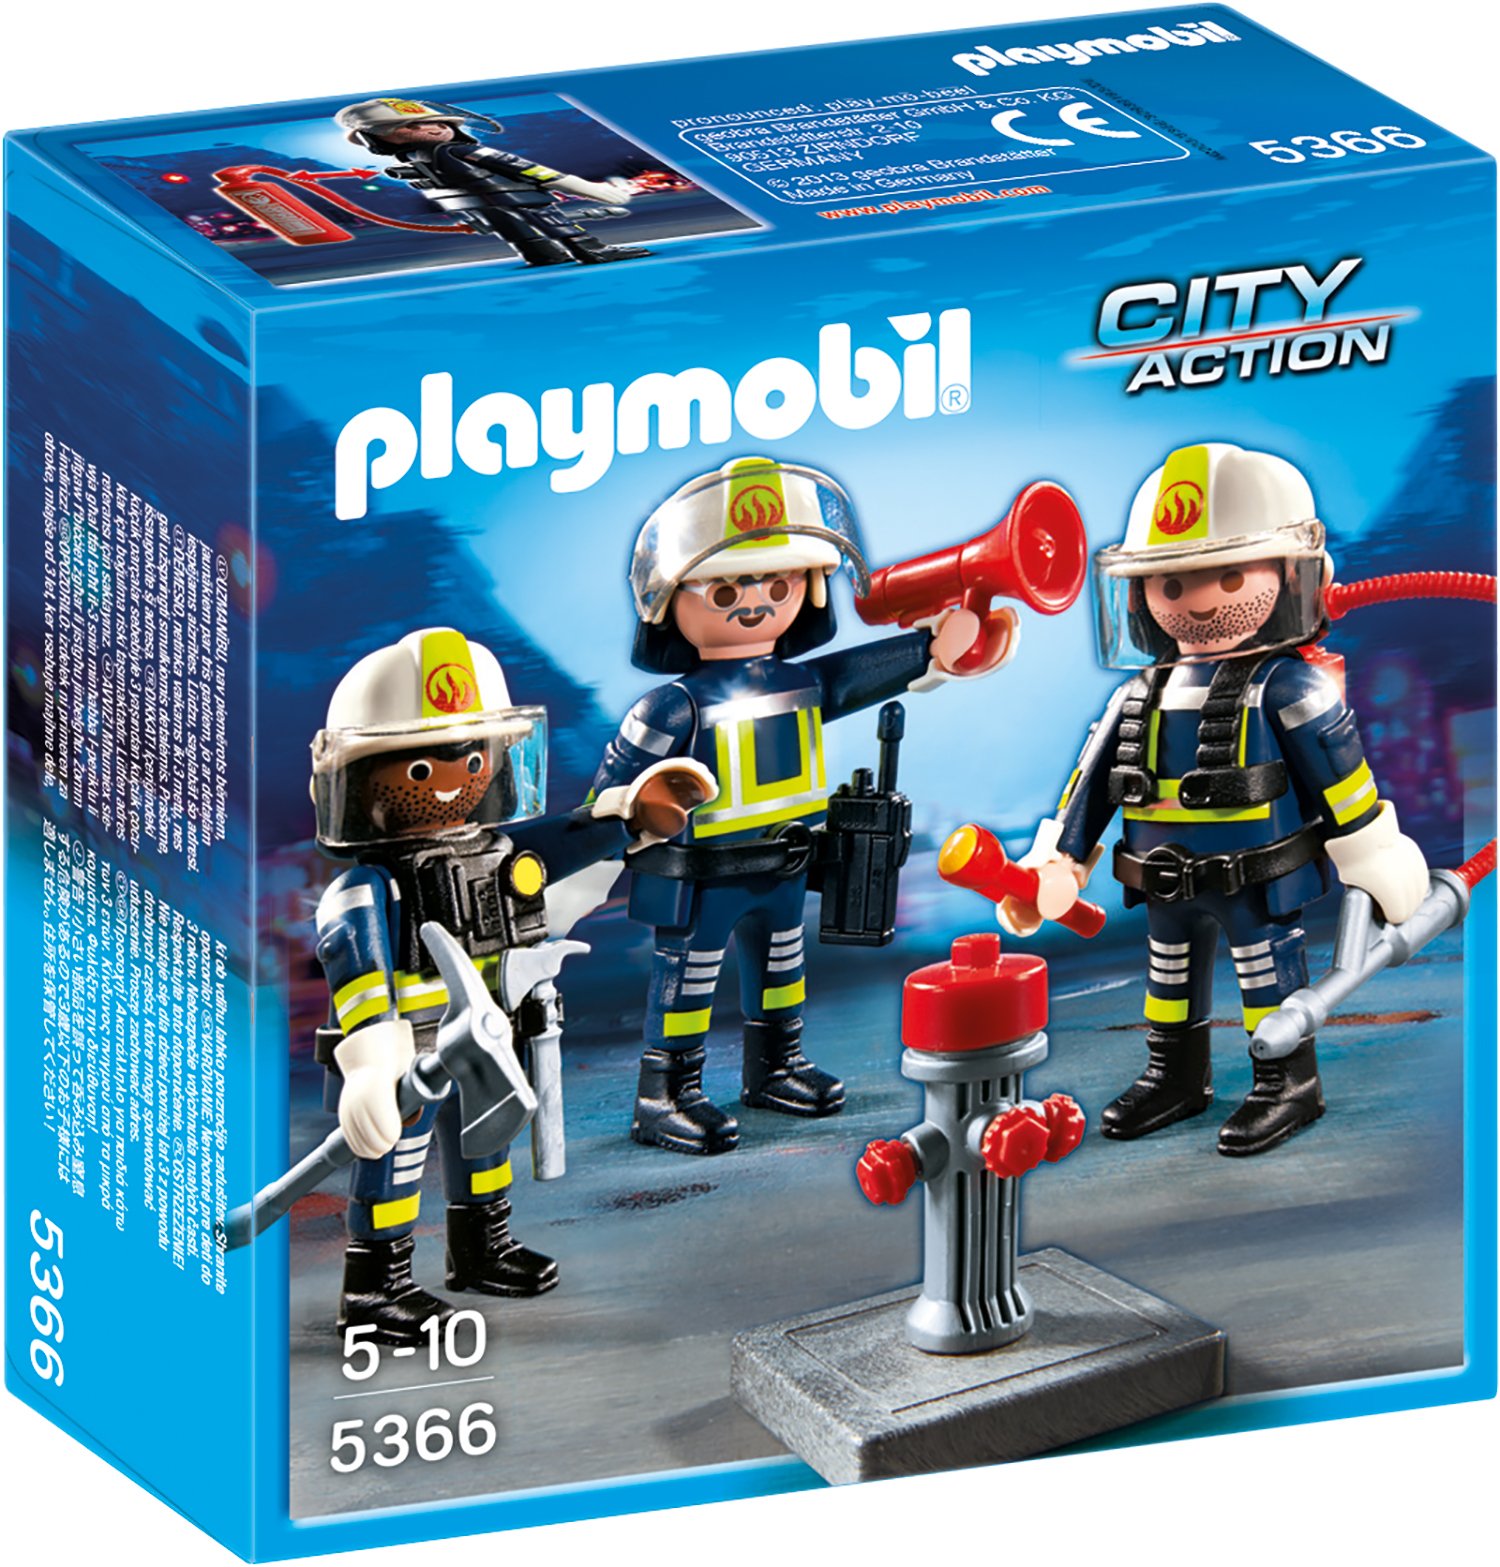 Playmobil City Action Firemen Team